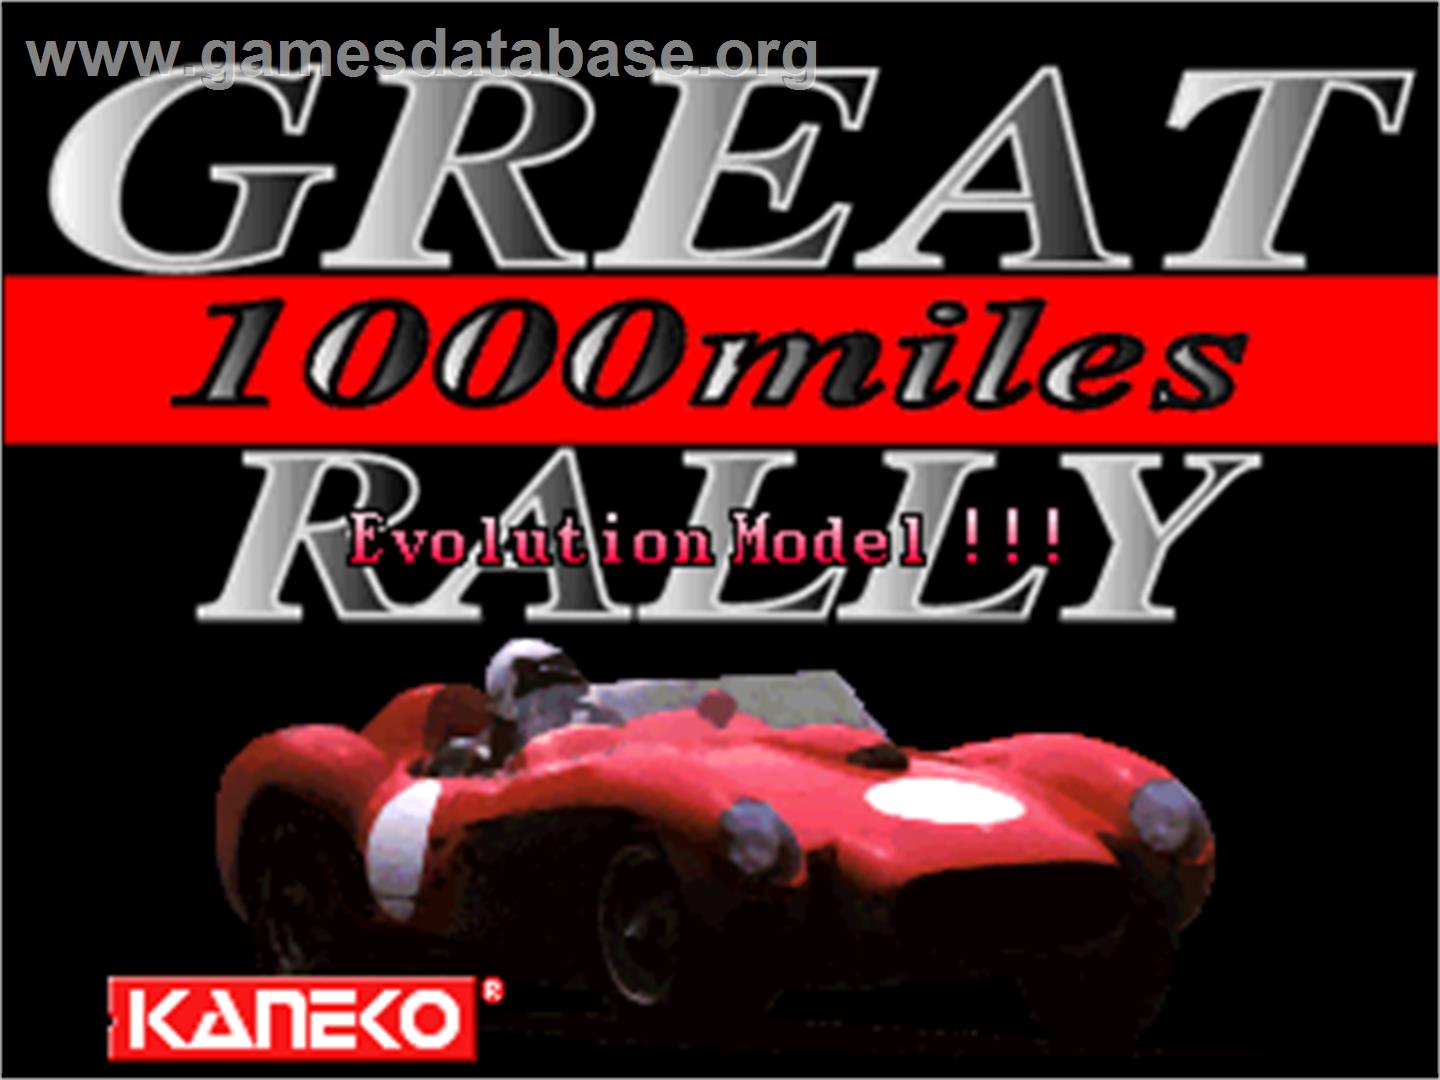 Great 1000 Miles Rally: Evolution Model!!! - Arcade - Artwork - Title Screen